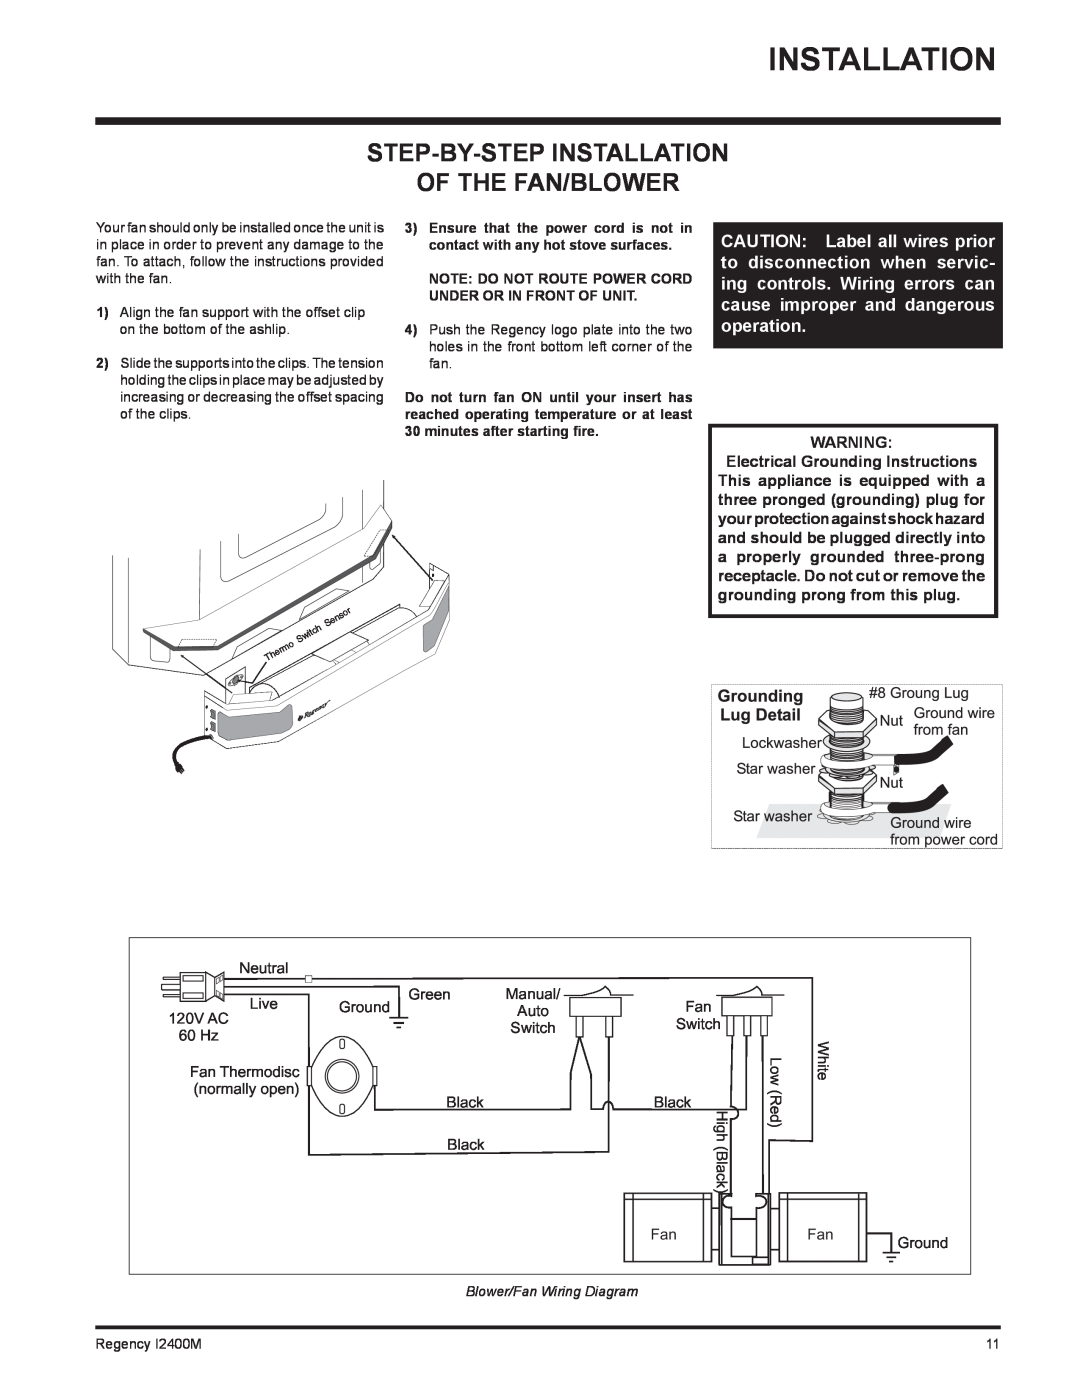 Regency I2400M installation manual Installation, Step-By-Stepinstallation Of The Fan/Blower 